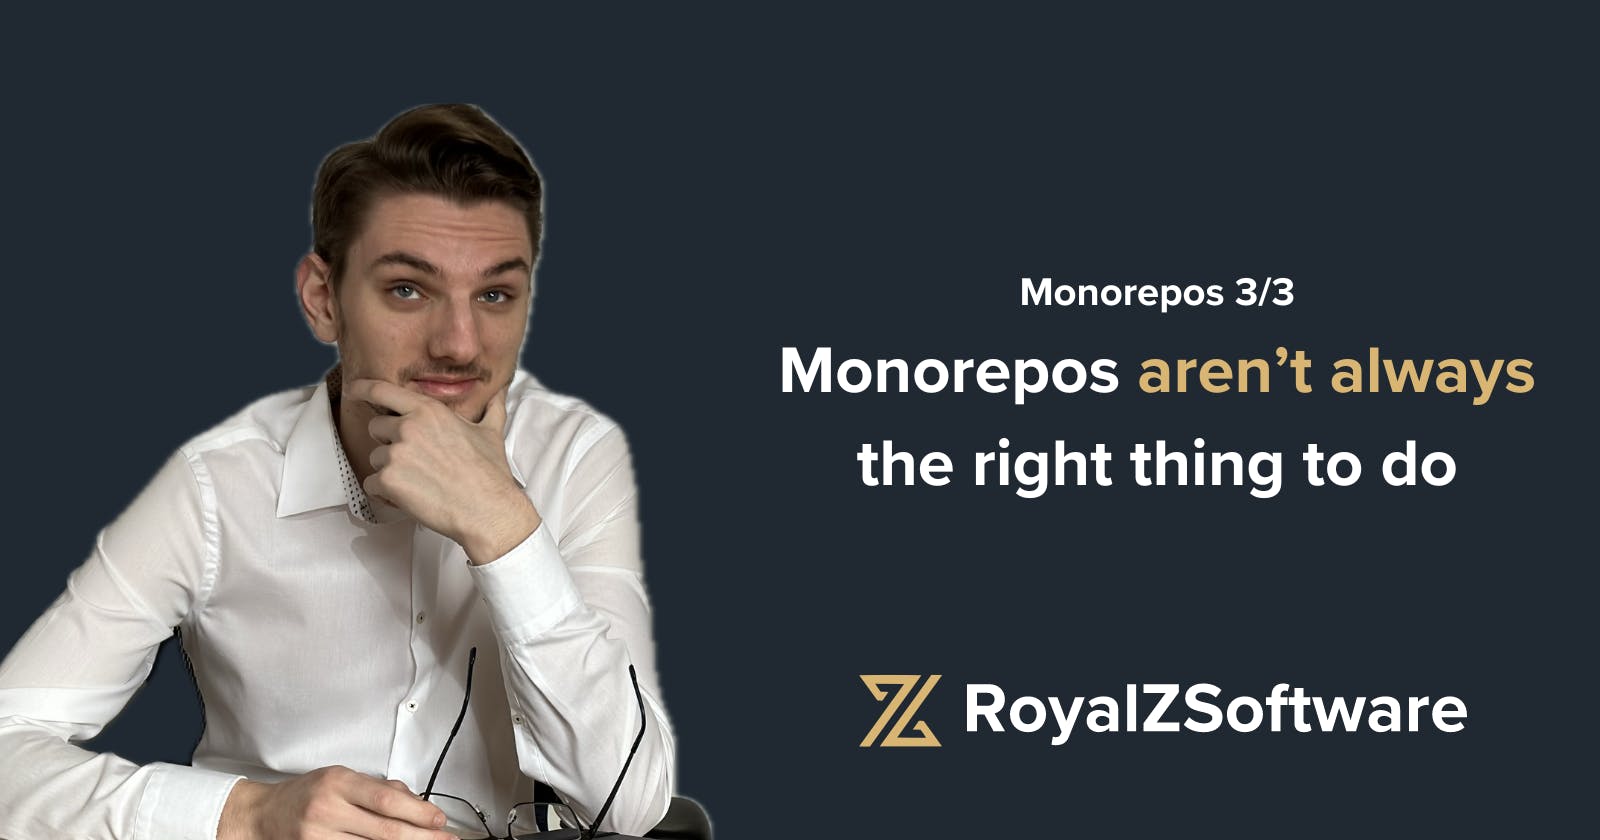 Monorepos aren't always the best solution